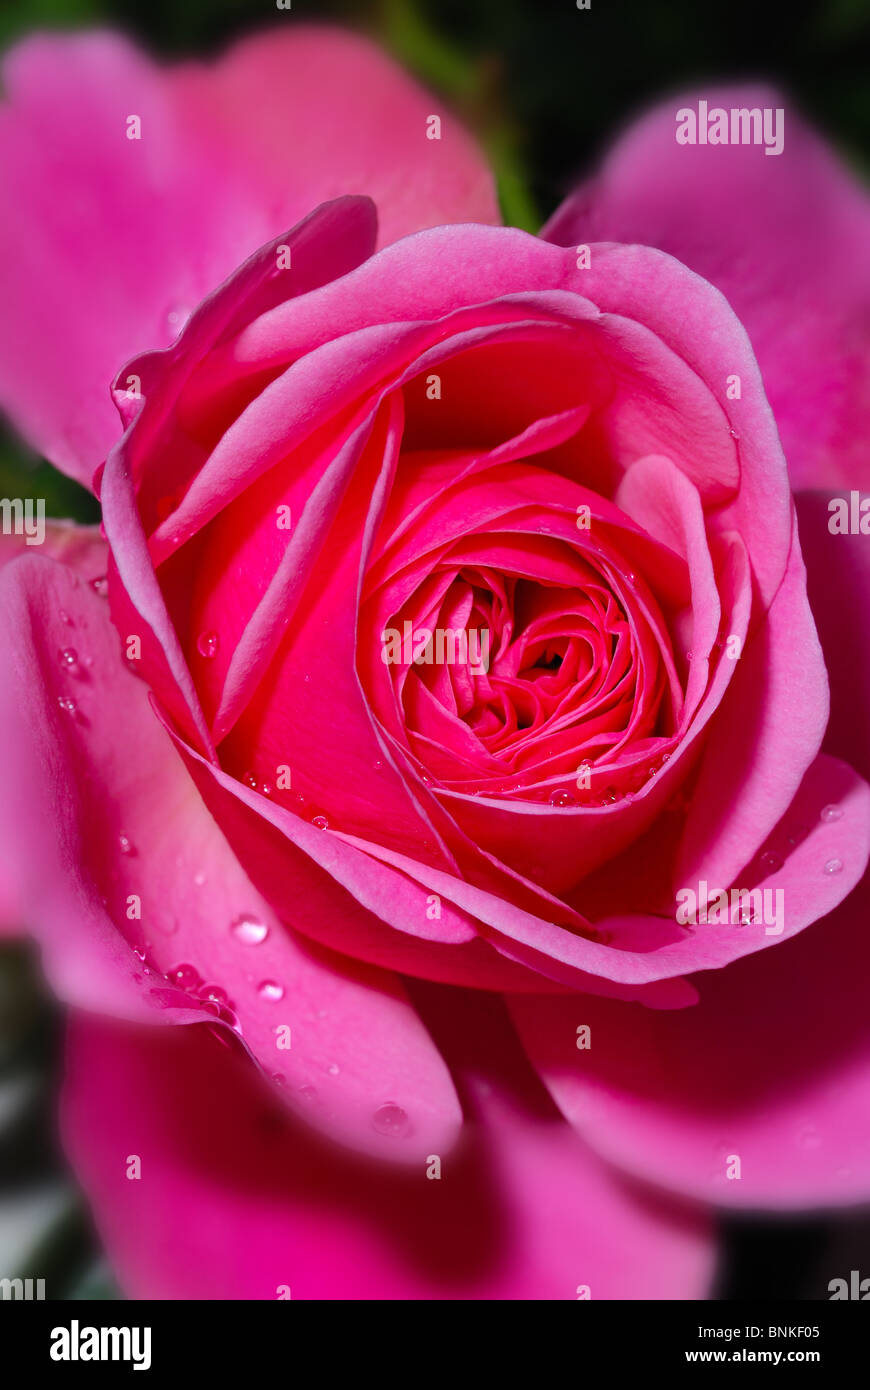 Rosas rojas flores de color rosa flor plantas florecen pétalos naturaleza  jardín crecer prosperar crecer flor primavera verano gota de agua  Fotografía de stock - Alamy